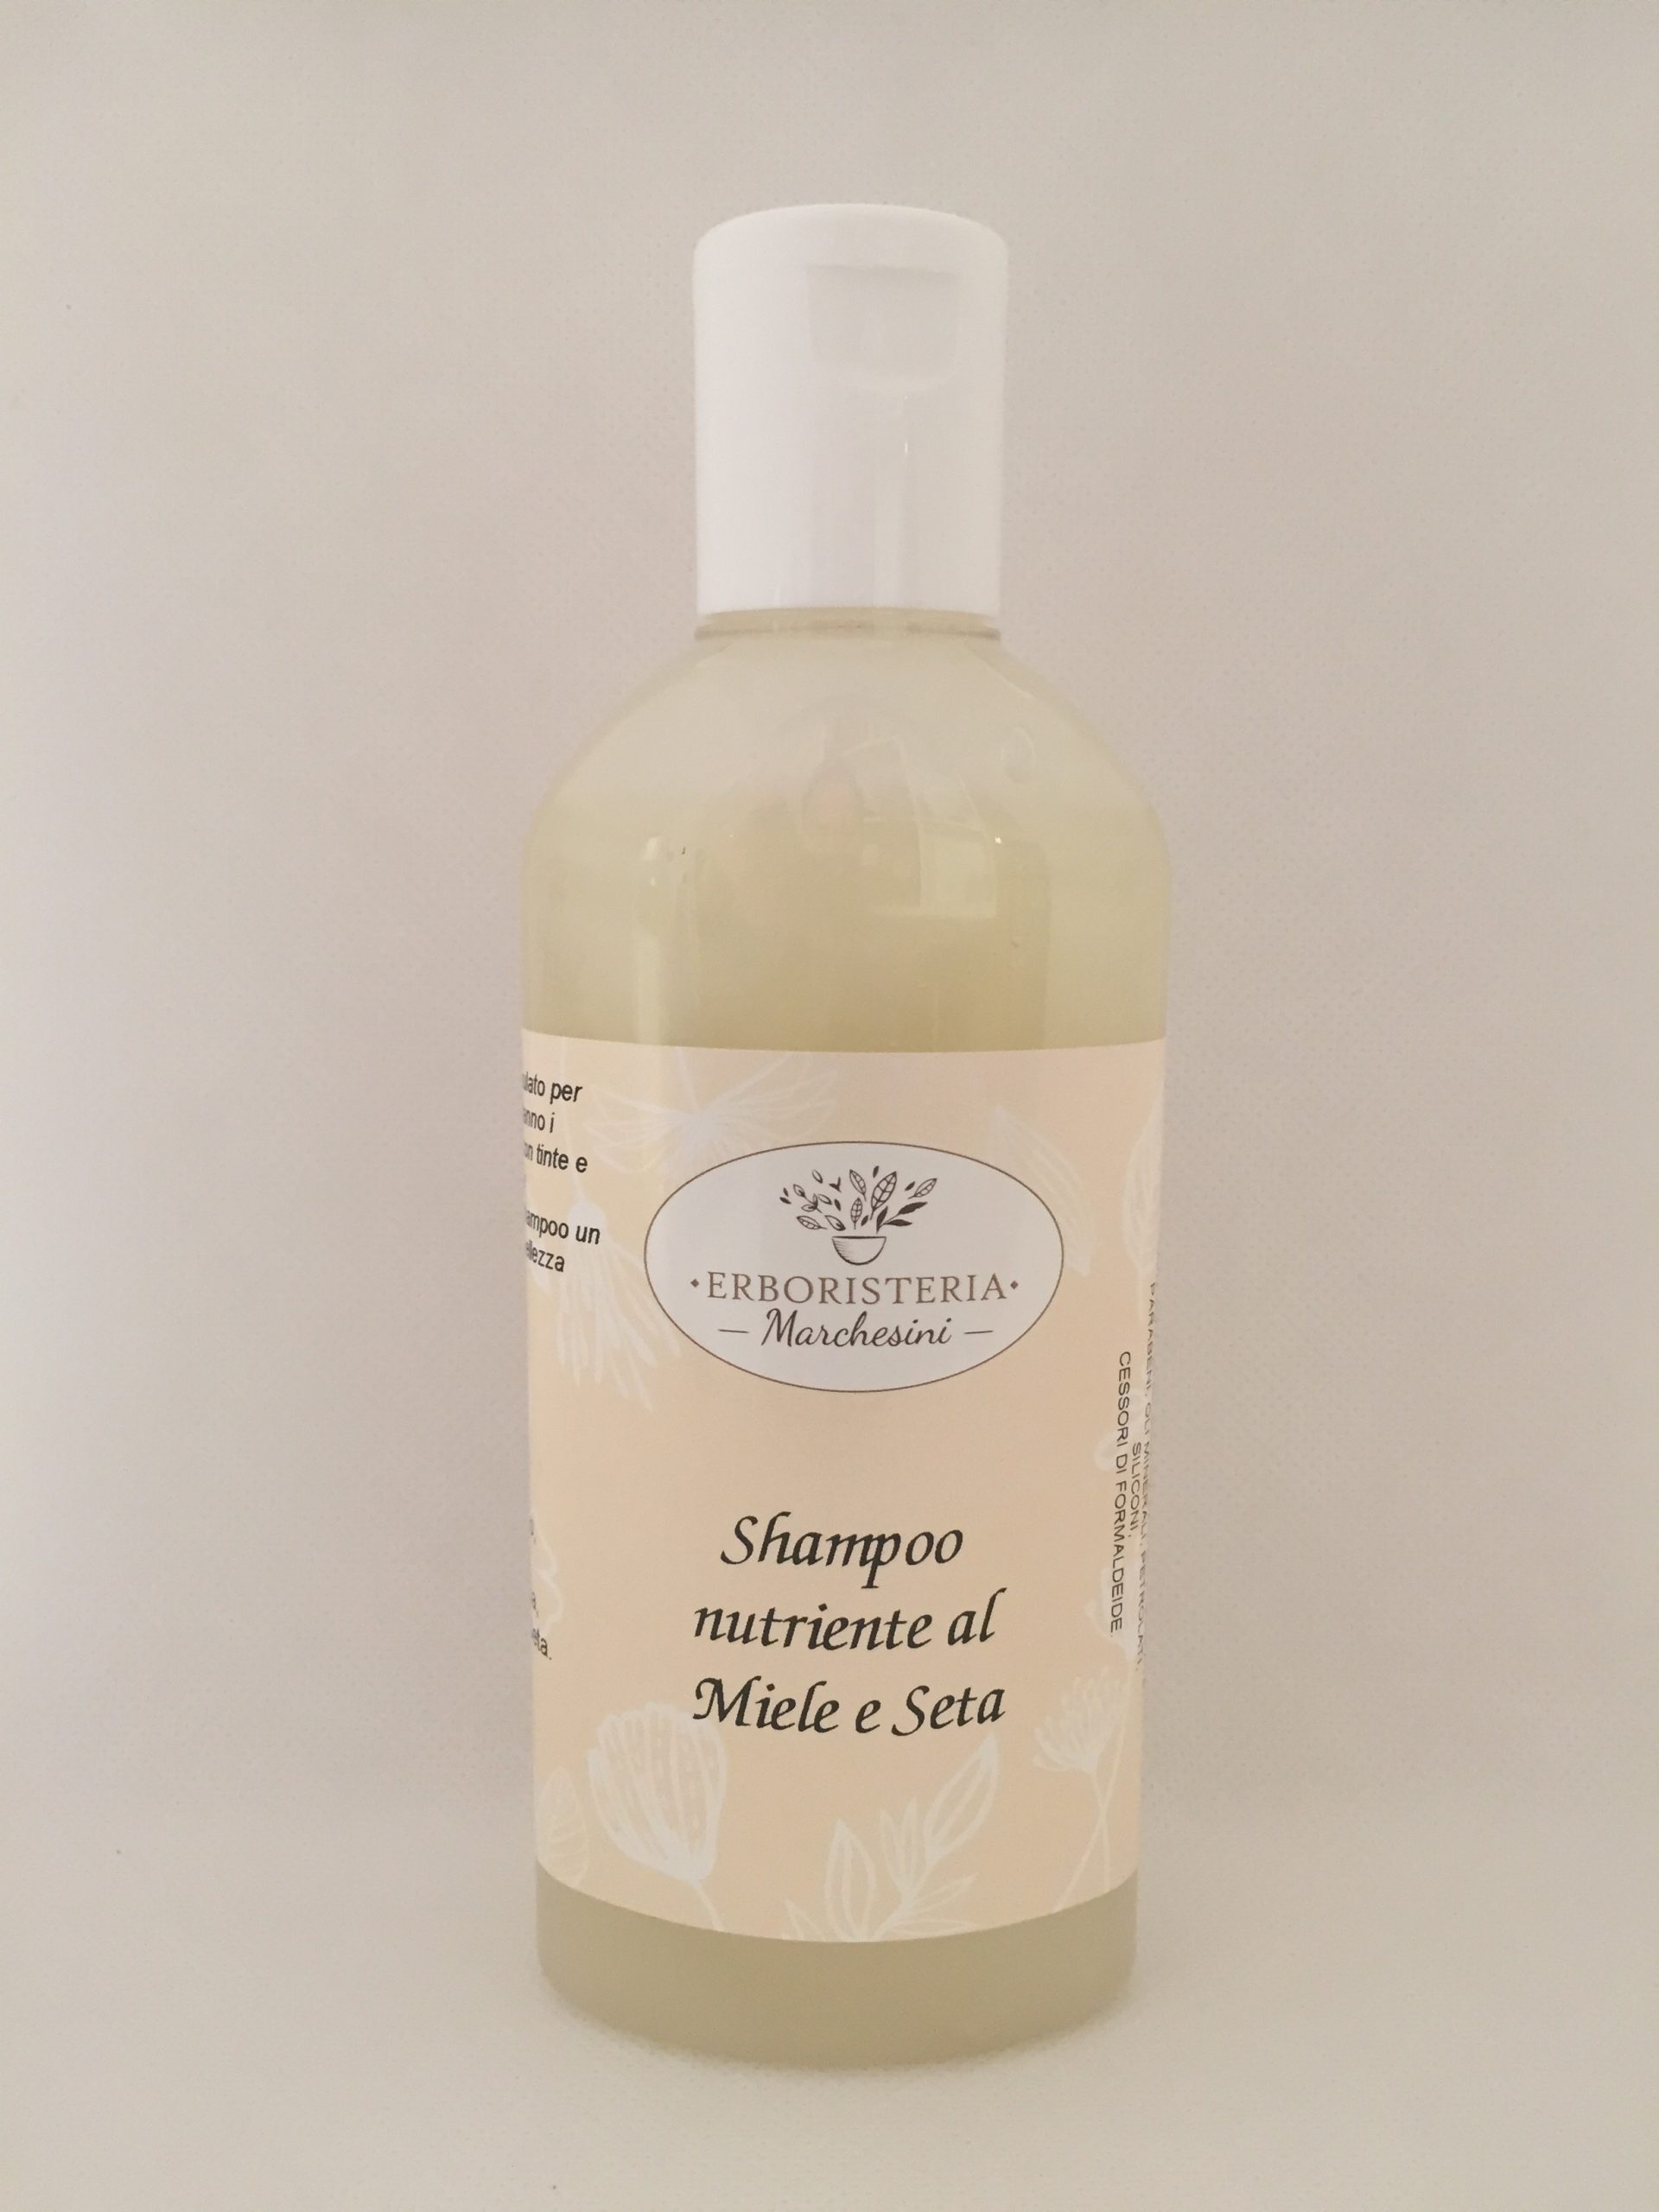 Shampoo nutriente al Miele e Seta